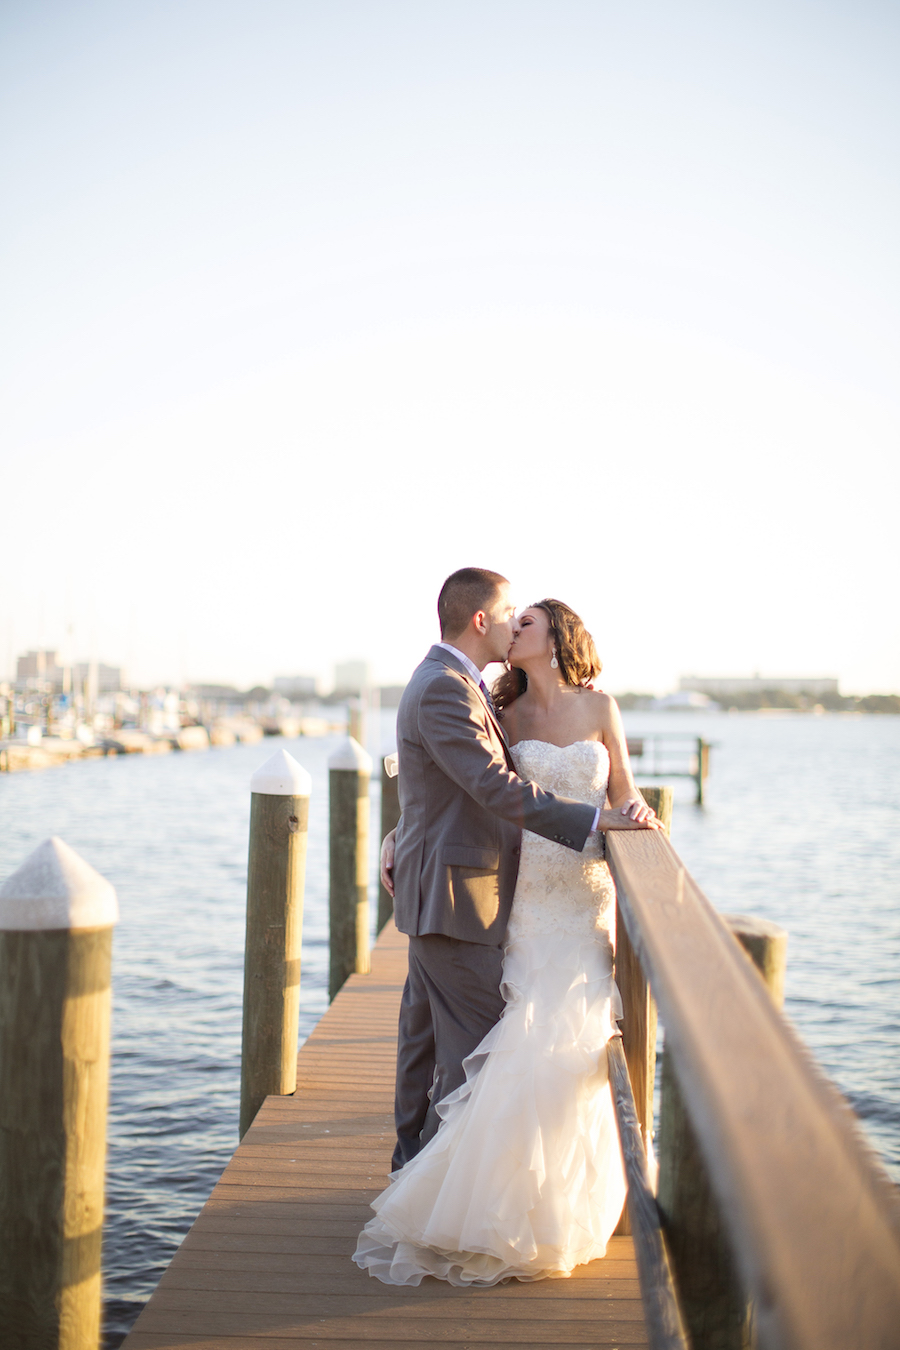 Waterfront Bridal Portrait with Bride and Groom Kissing on Dock | Sarasota Wedding Photography Djamel Photography